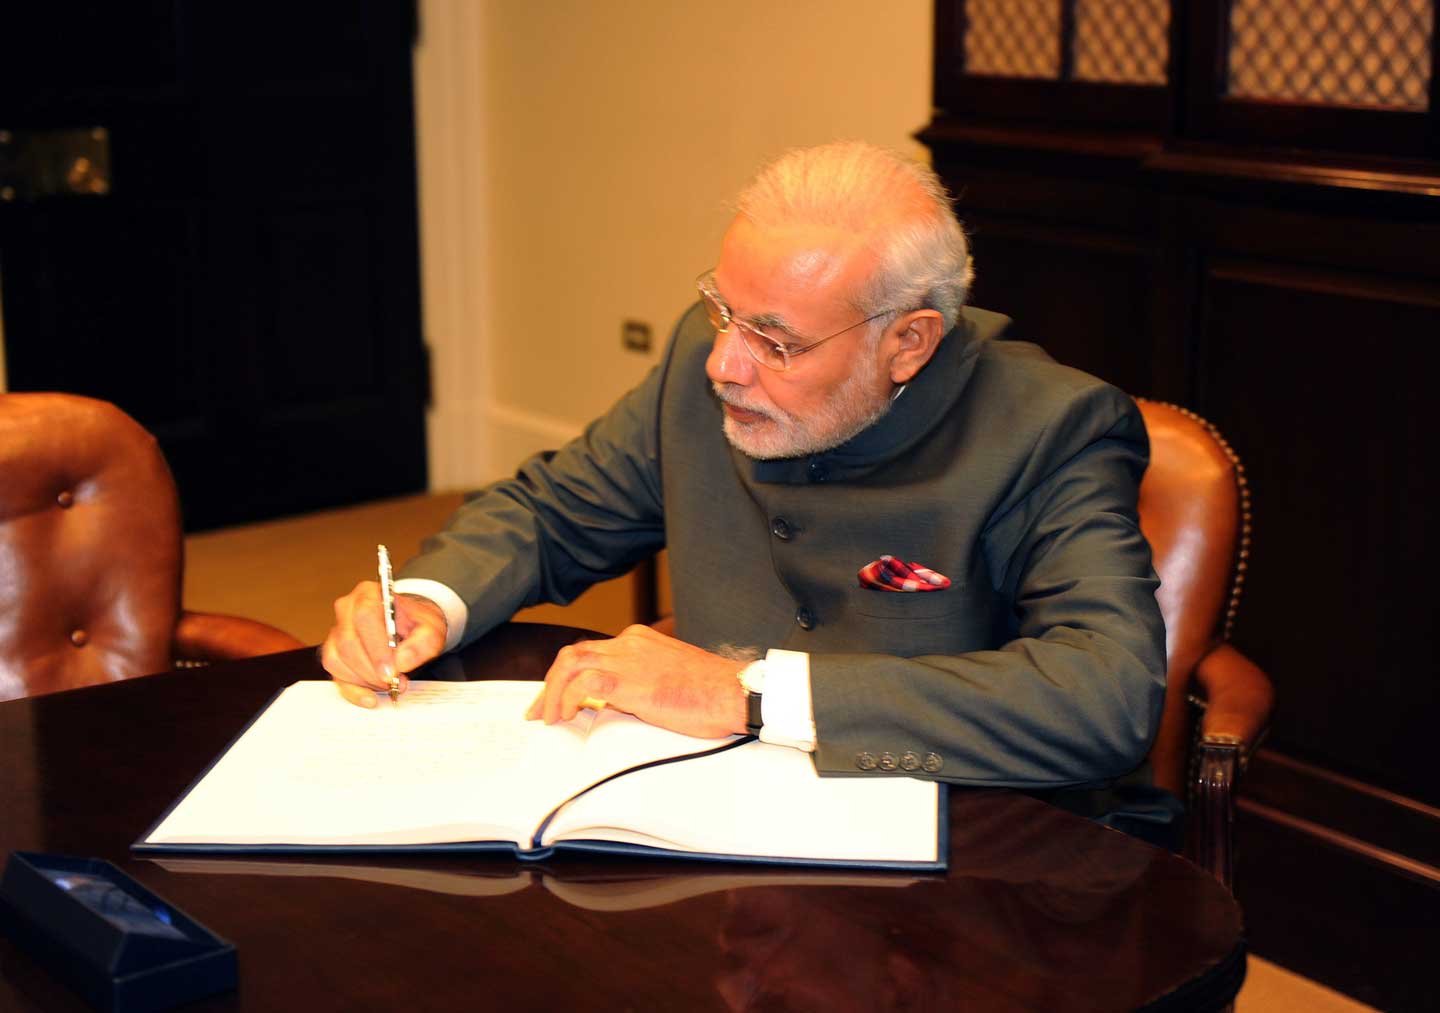 Narendra Modi signing the visitors log at the White House